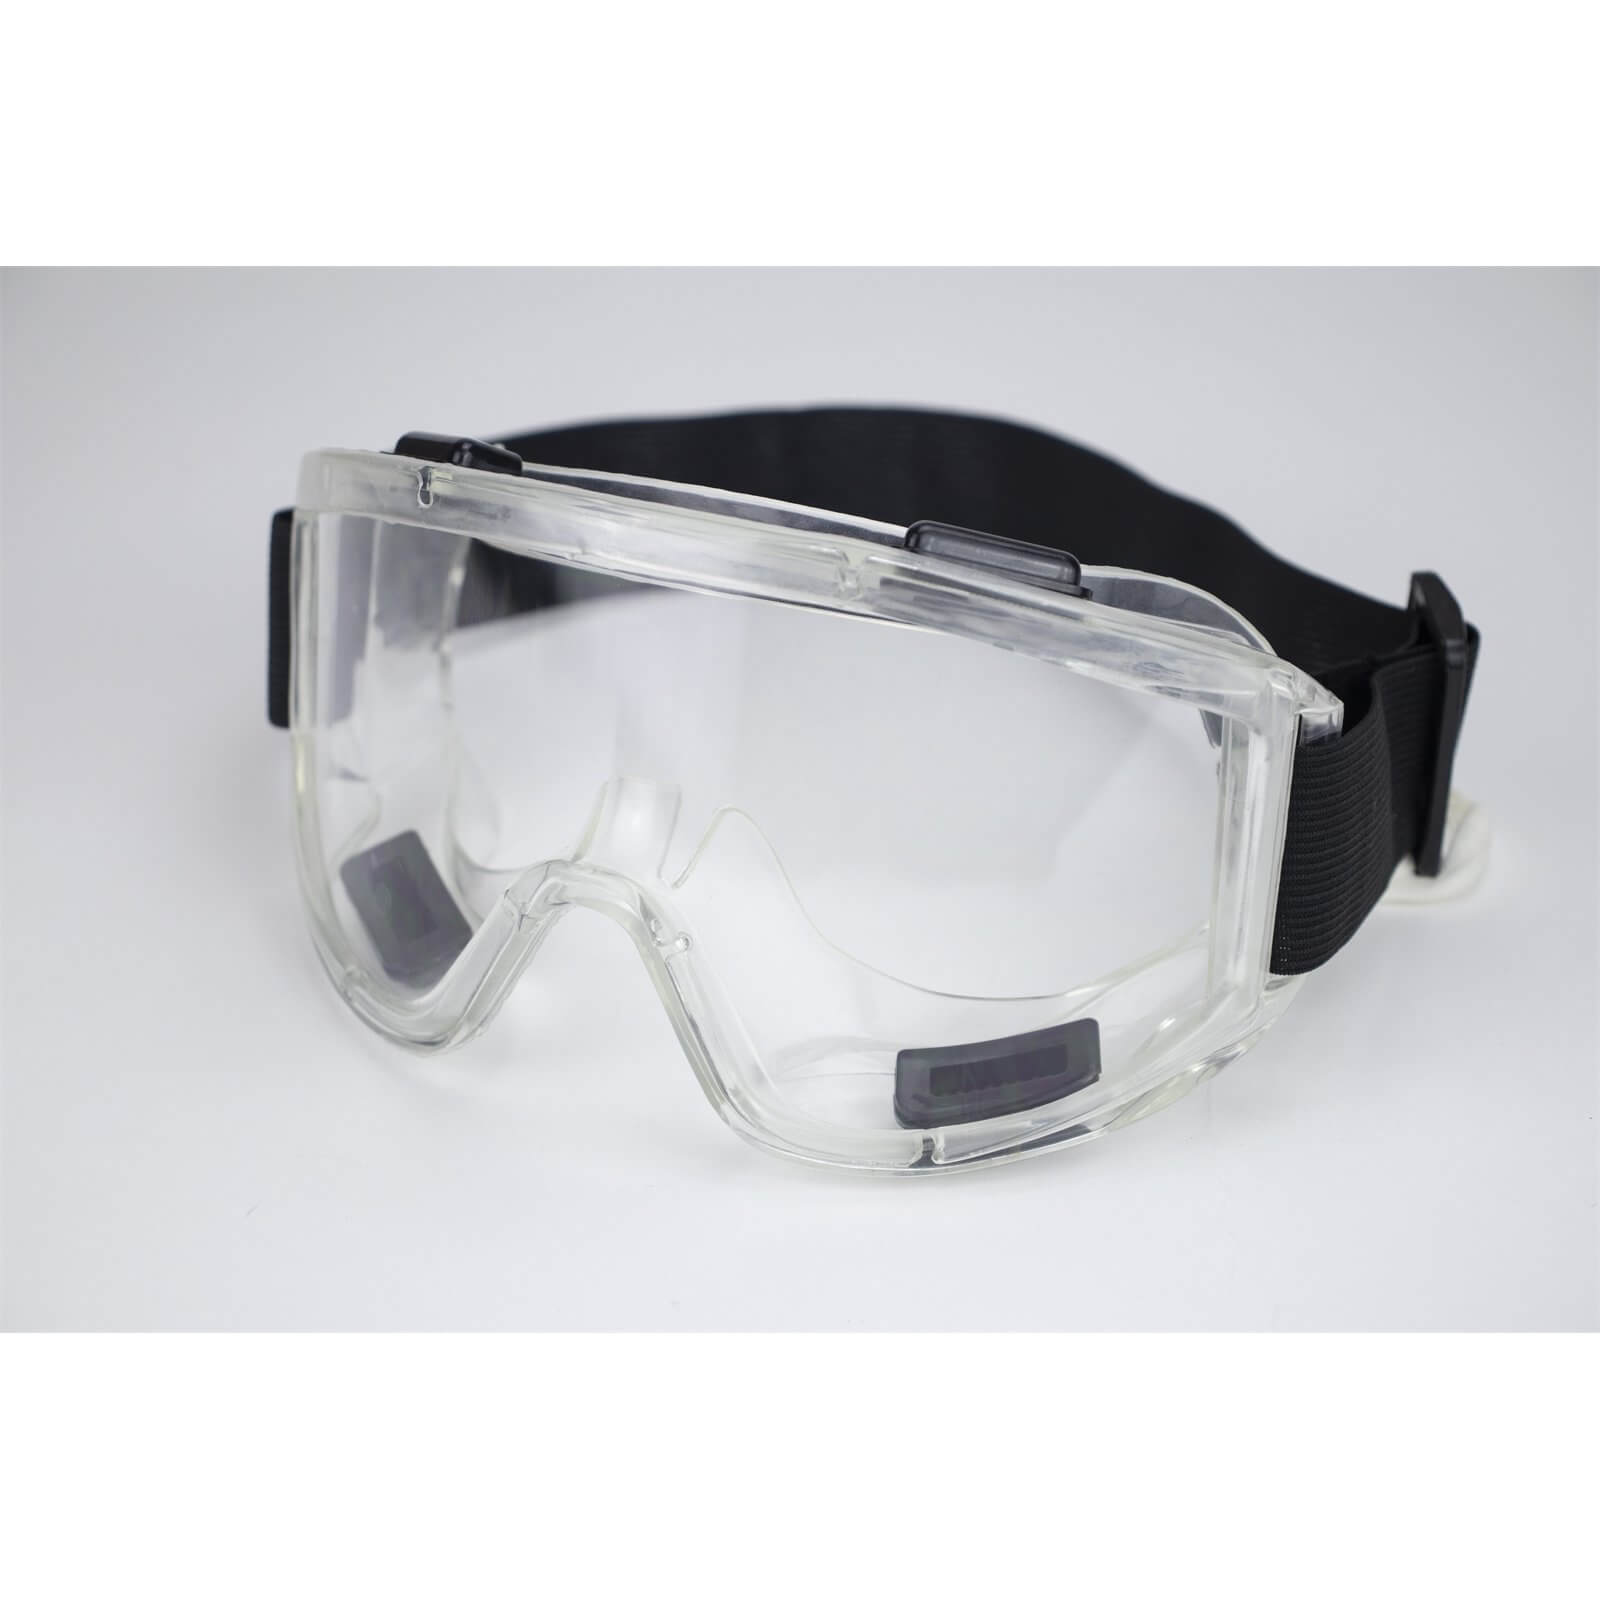 Vitrex Premium Safety Goggles